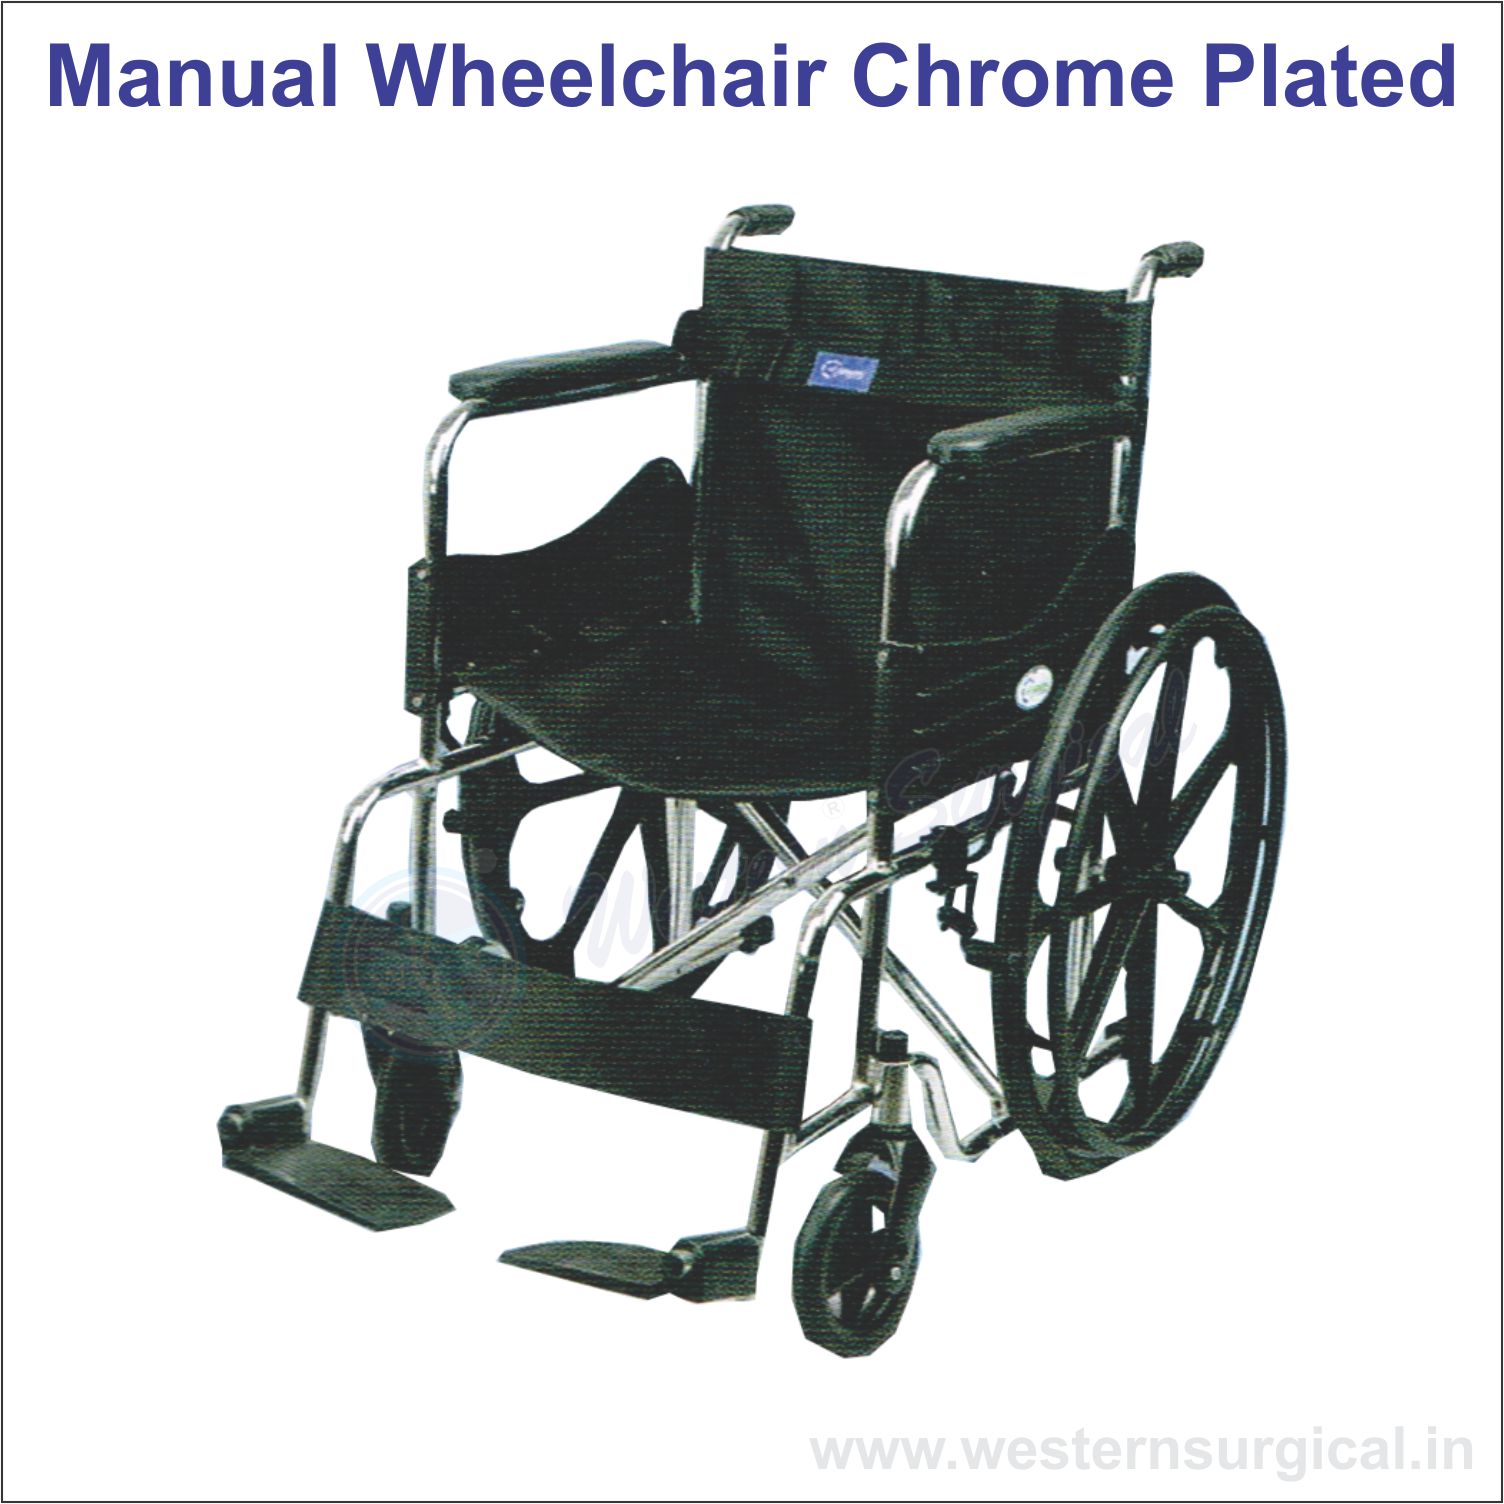 Manual Wheelchair Chrome Plated